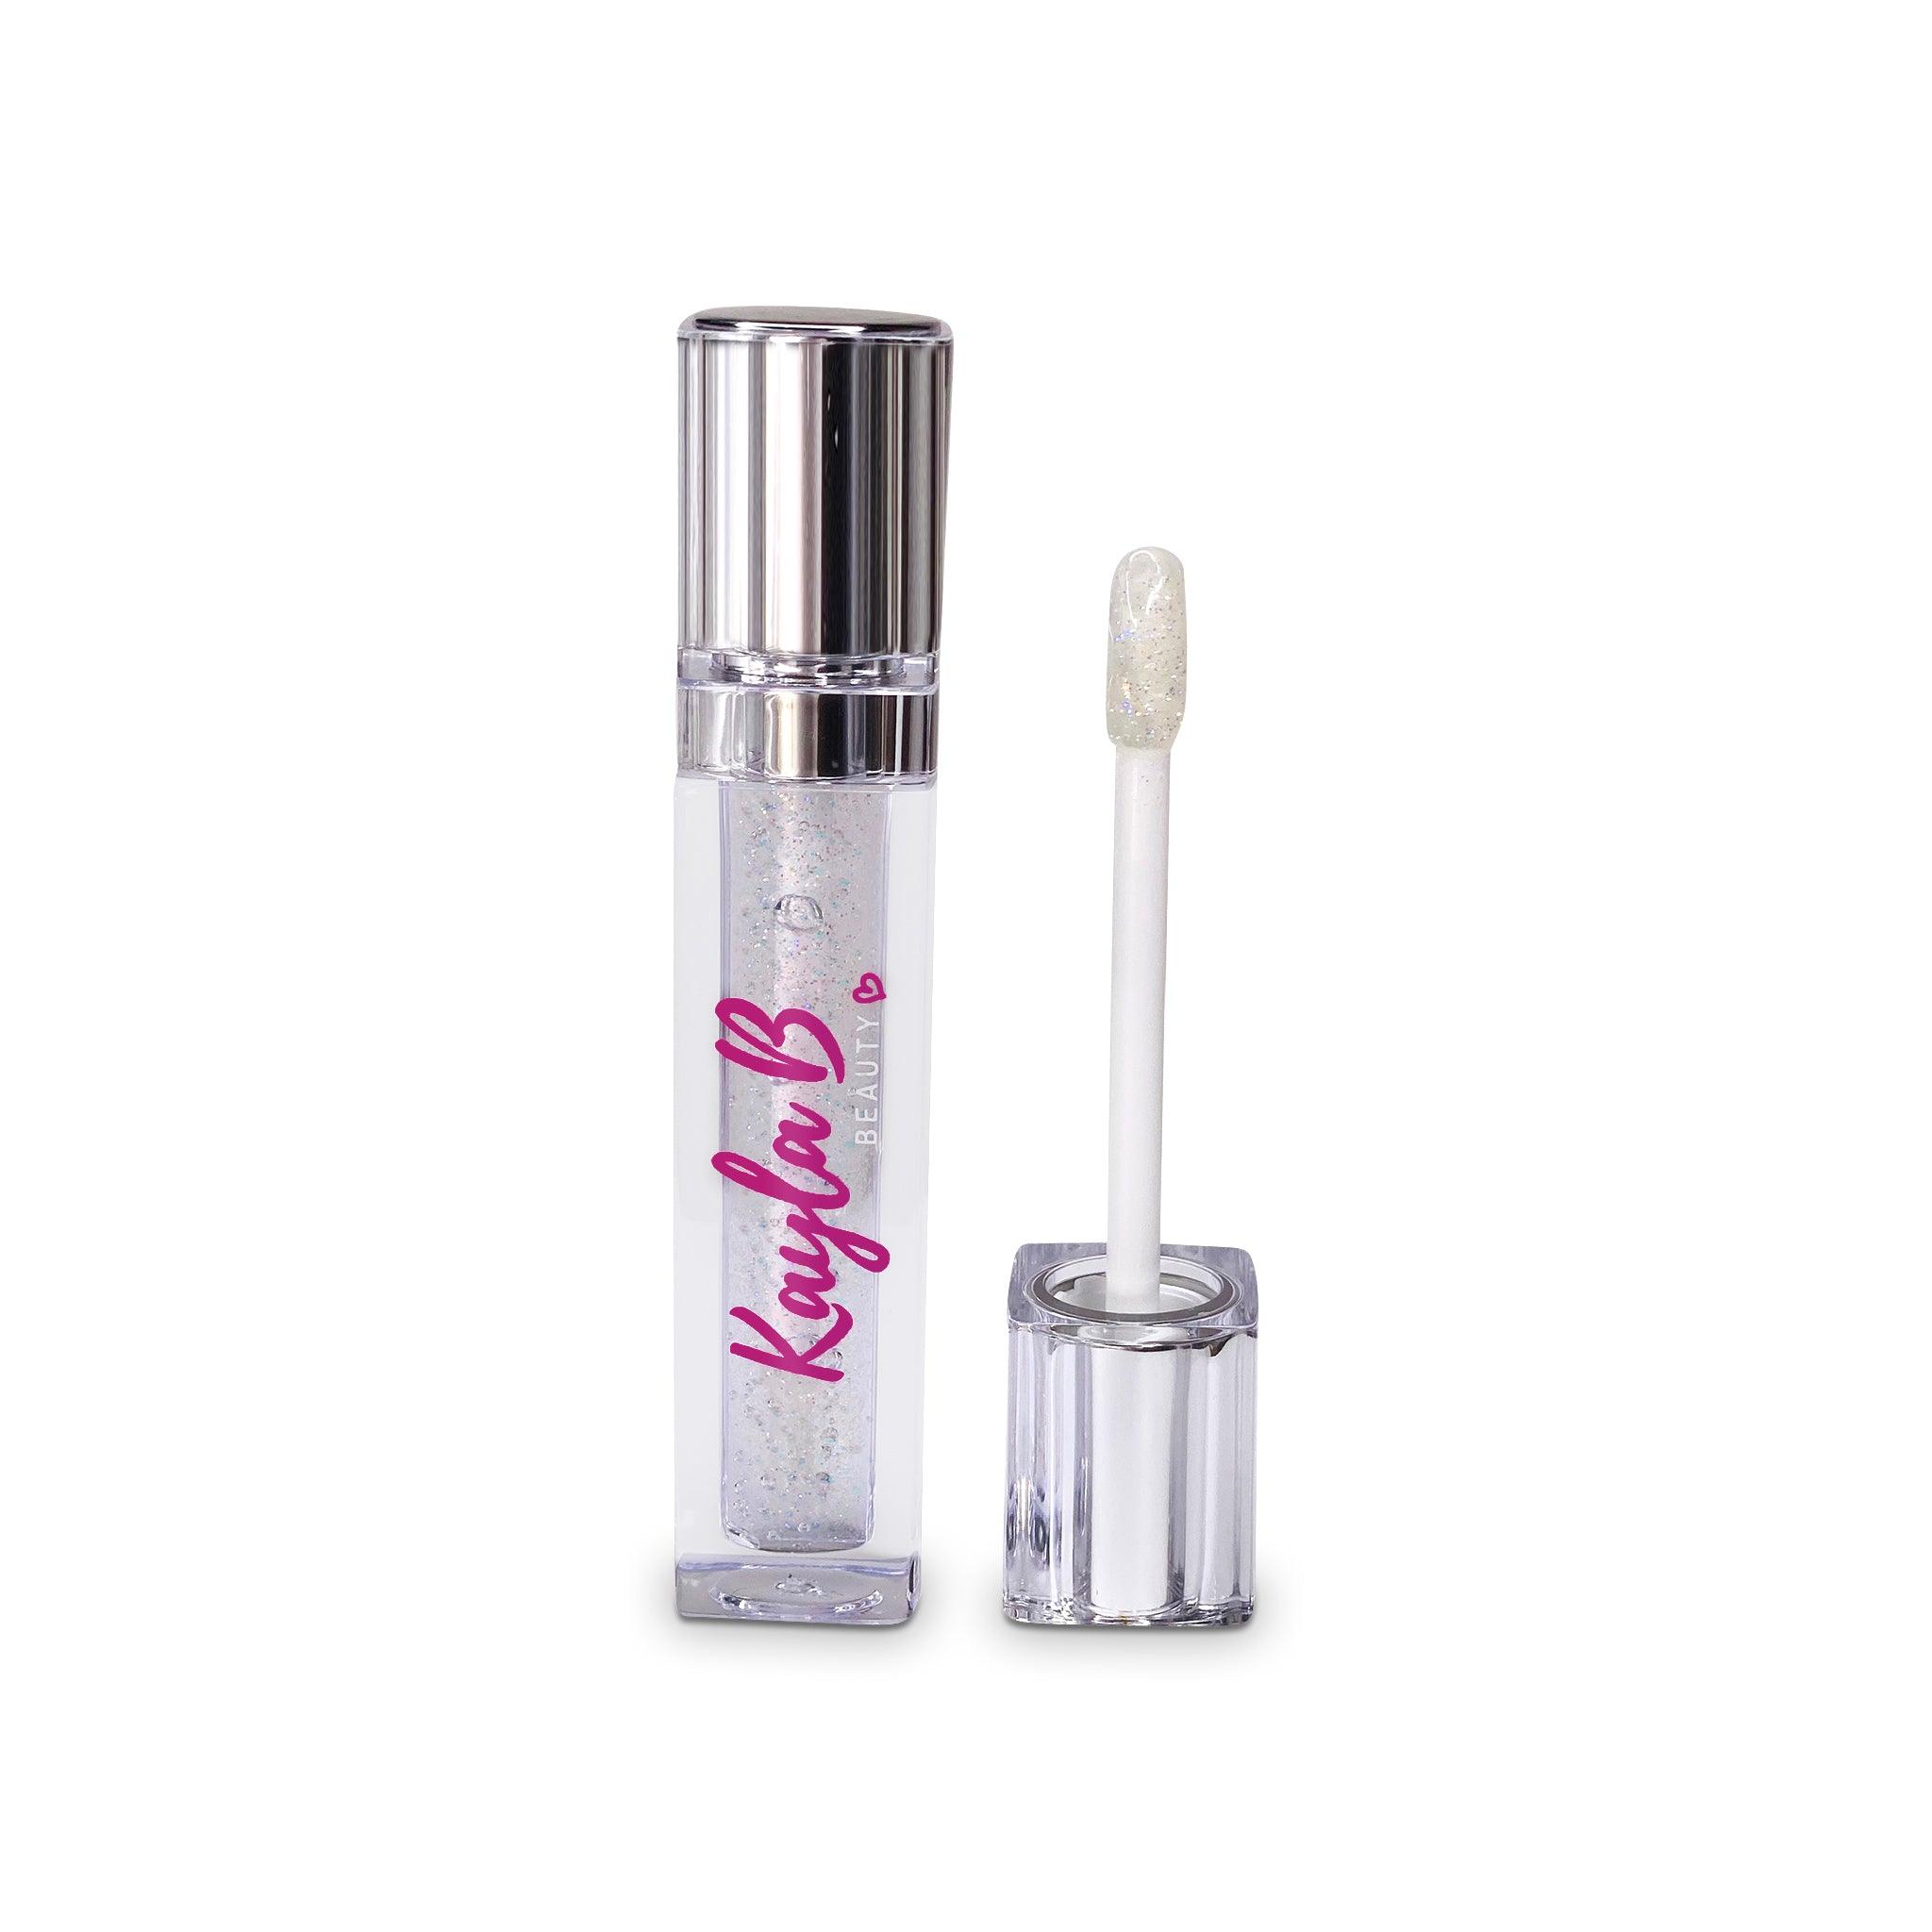 Cloud Nine - Kayla B Beauty - Flavored Lip Gloss, Glitter Lip Gloss